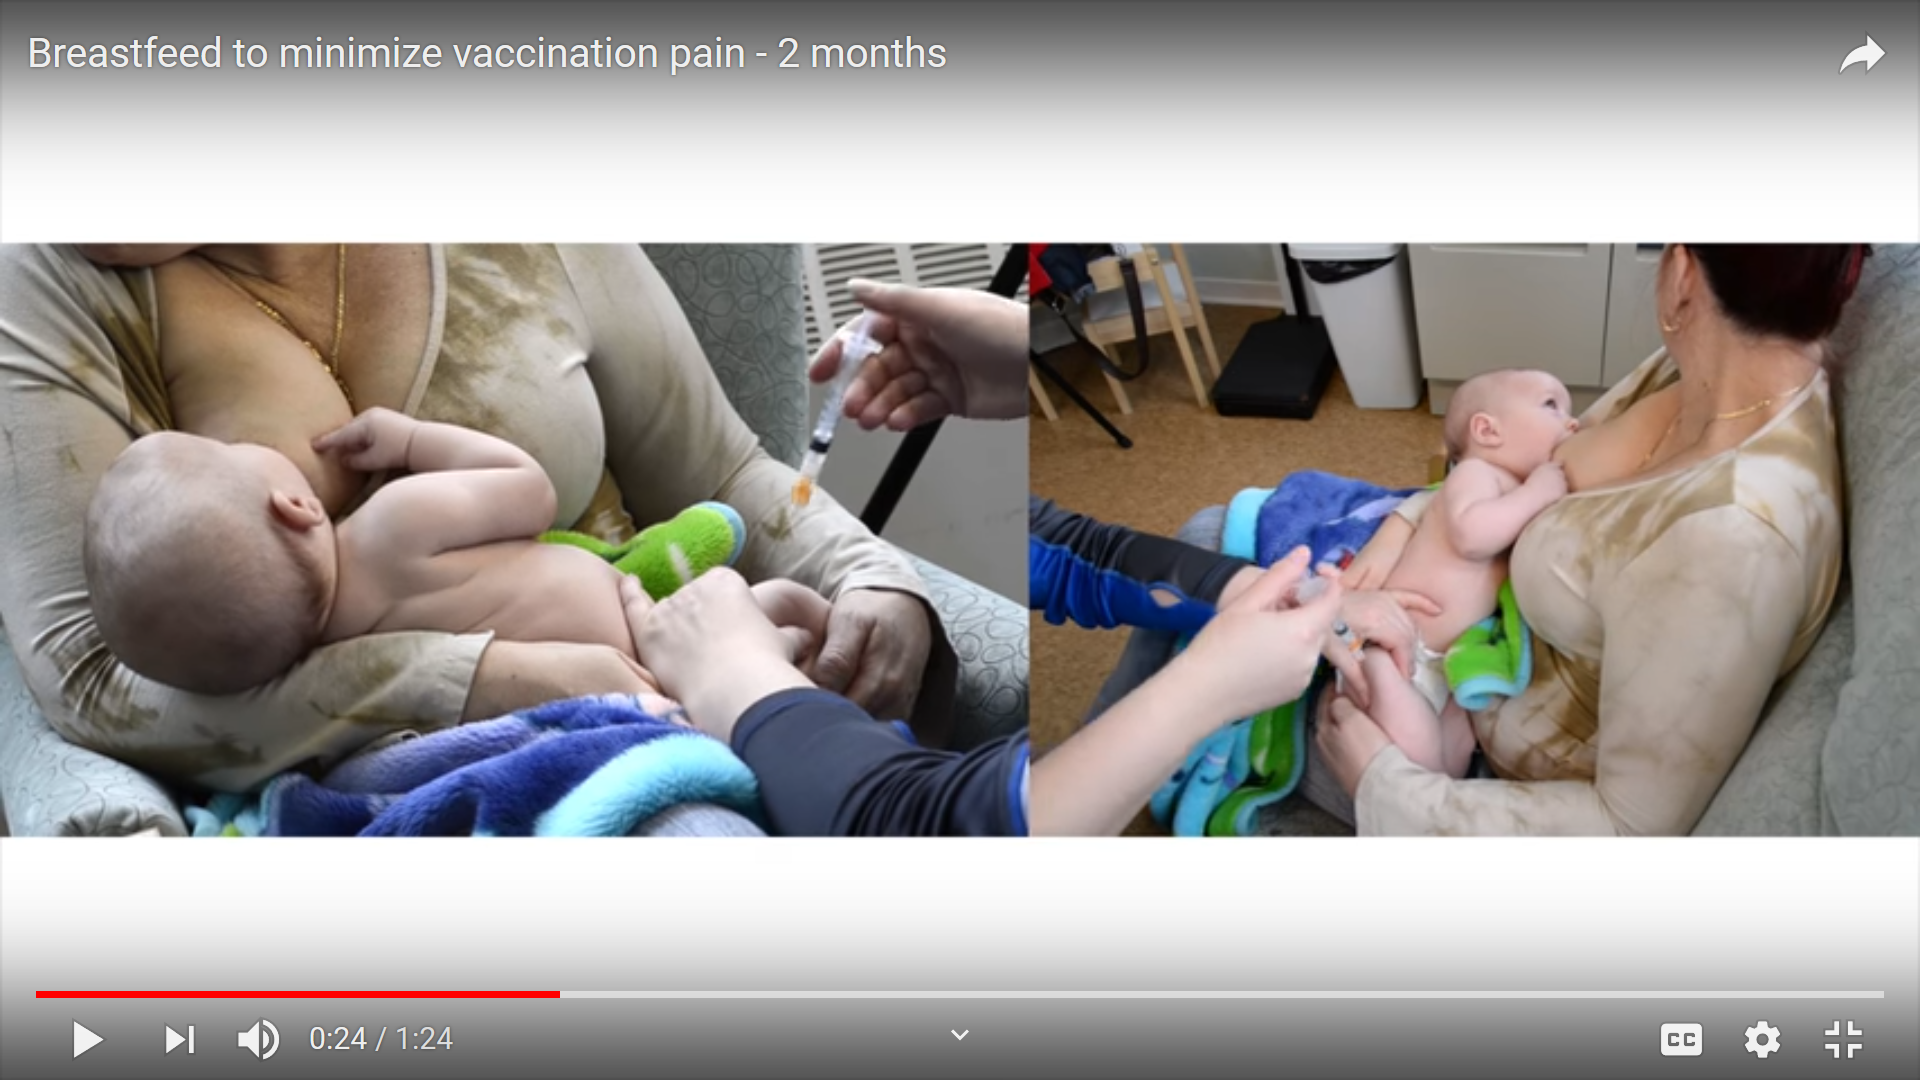 Breastfeeding to minimize vaccination pain